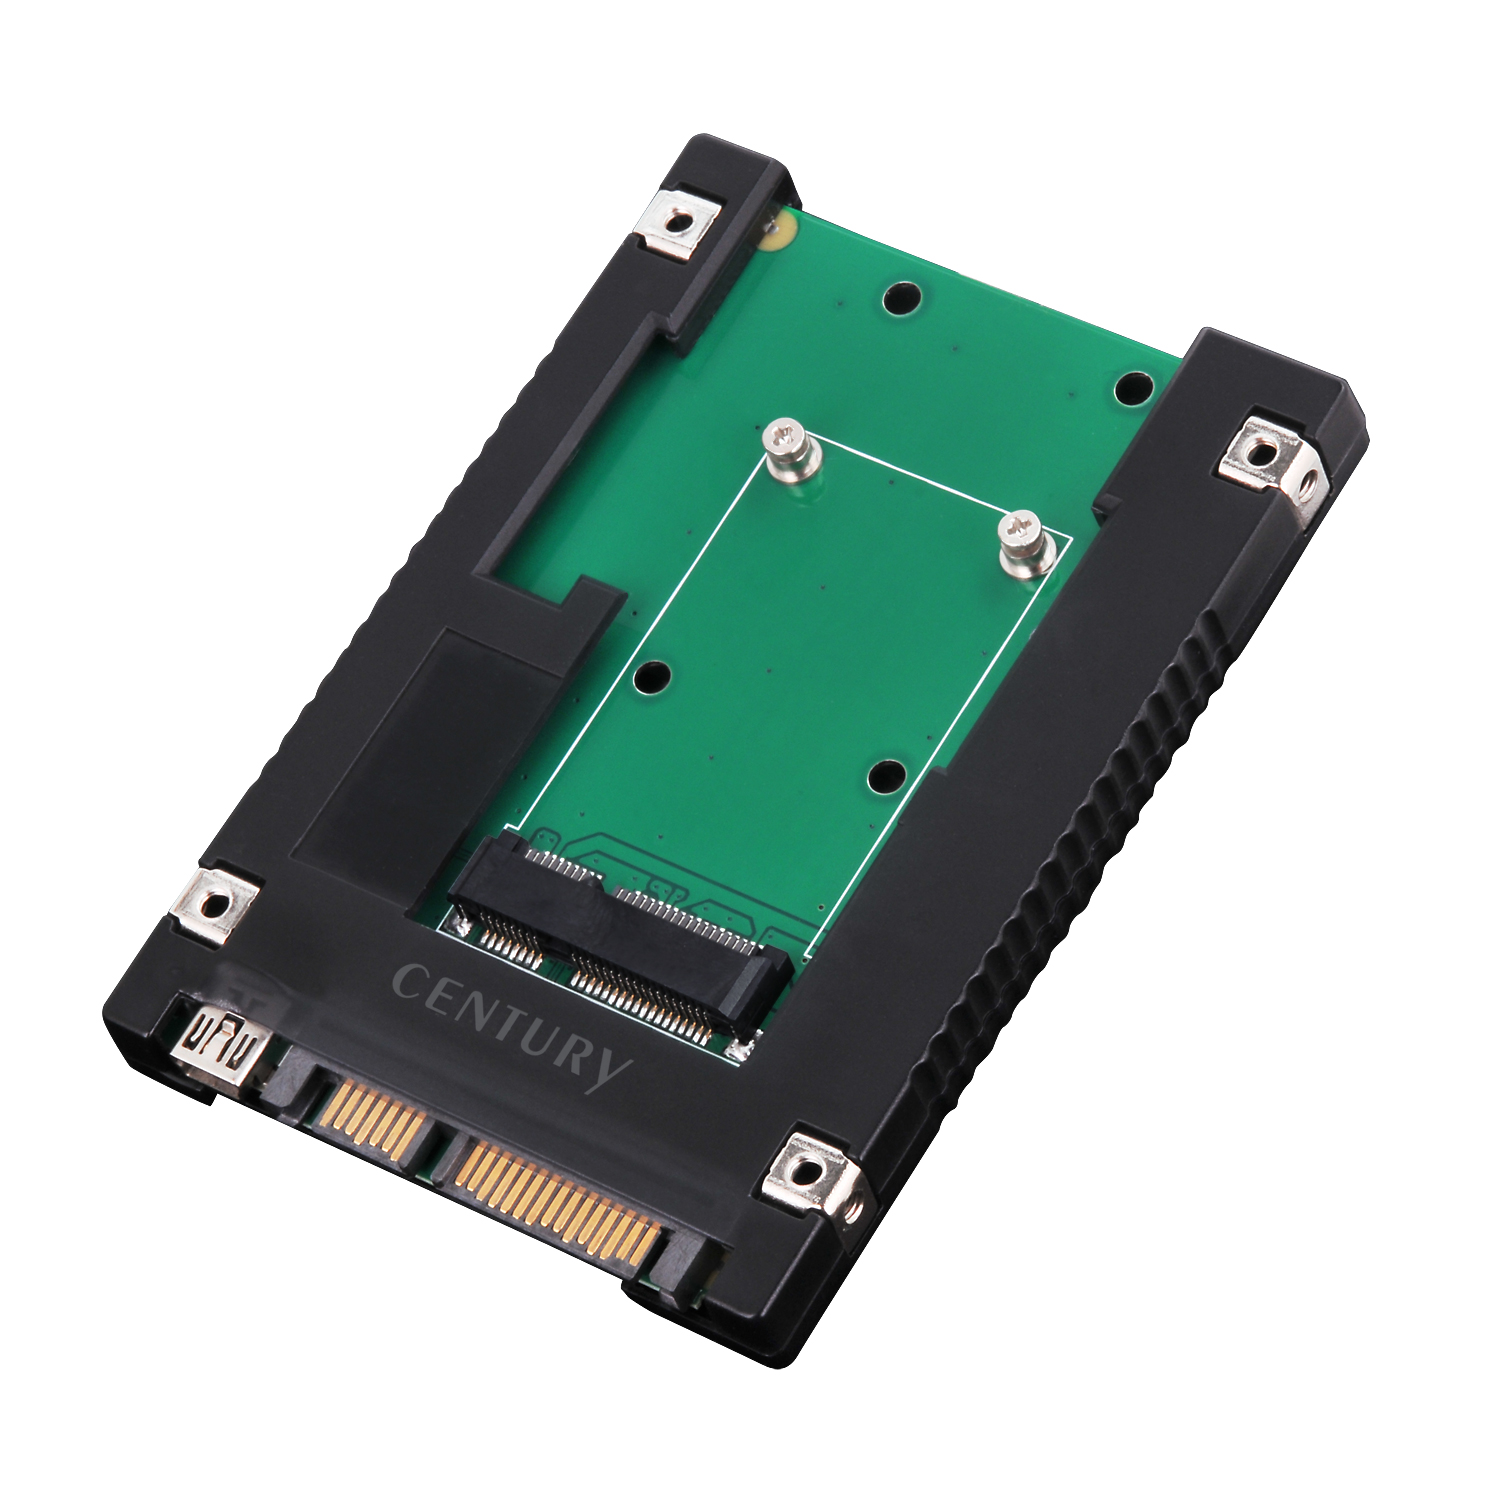 mSATA SSDを2.5インチHDDサイズでフル活用！mSATA SSDを9.5mm厚の2.5インチSATA HDDサイズに変換するアダプター『裸族のインナー  for mSATA』発売開始 - ニュースリリース - 株式会社センチュリー